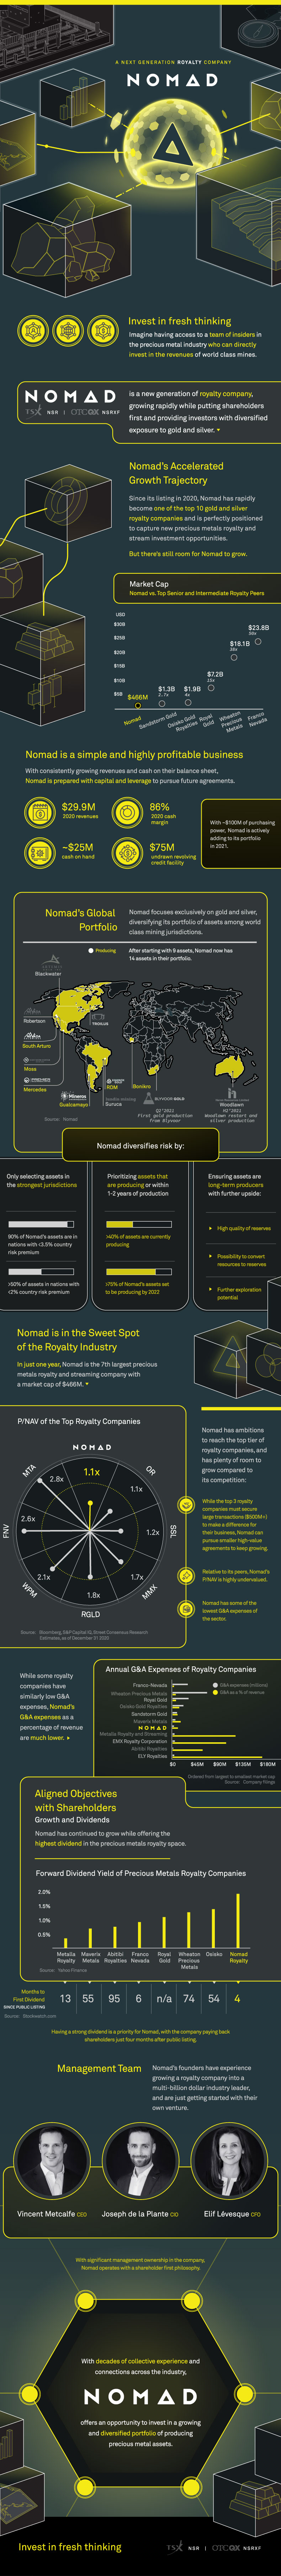 Nomad infographic